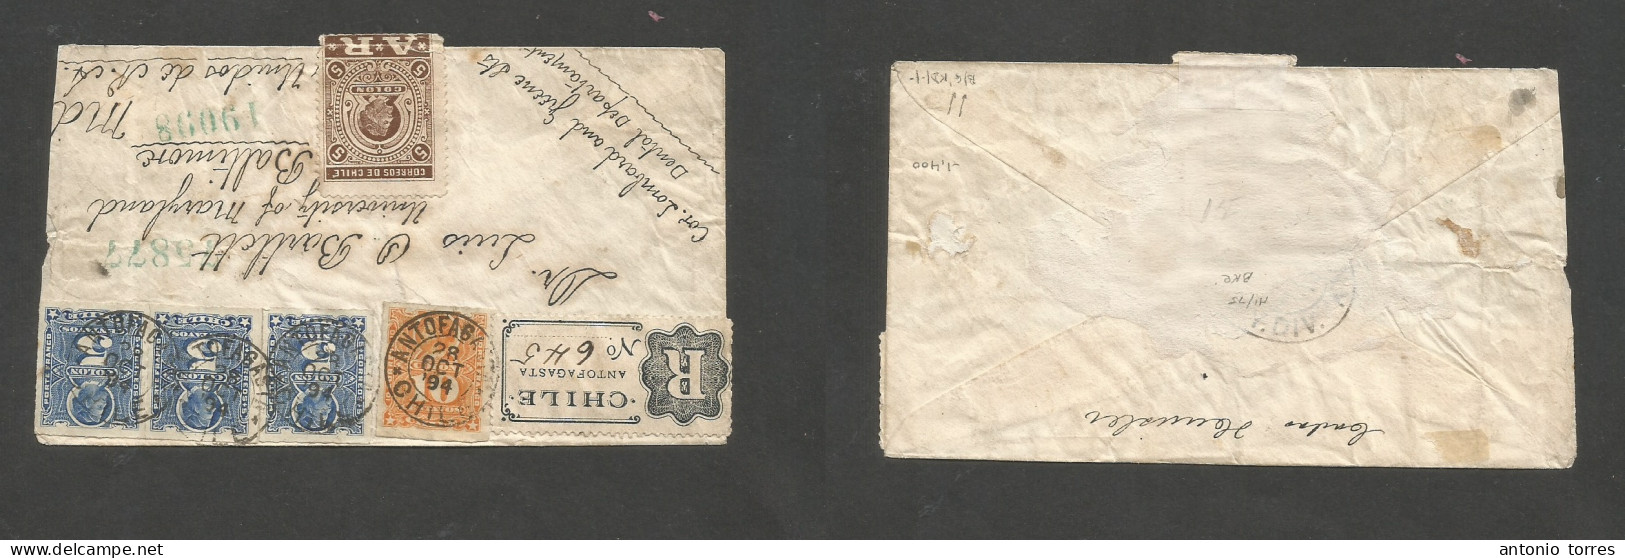 Chile. 1894 (28 Oct) Antofagasta - USA, Baltimore, Md. Registered AR Multifkd Env At 25c + 5c Brown Special AR Stamp Via - Chile